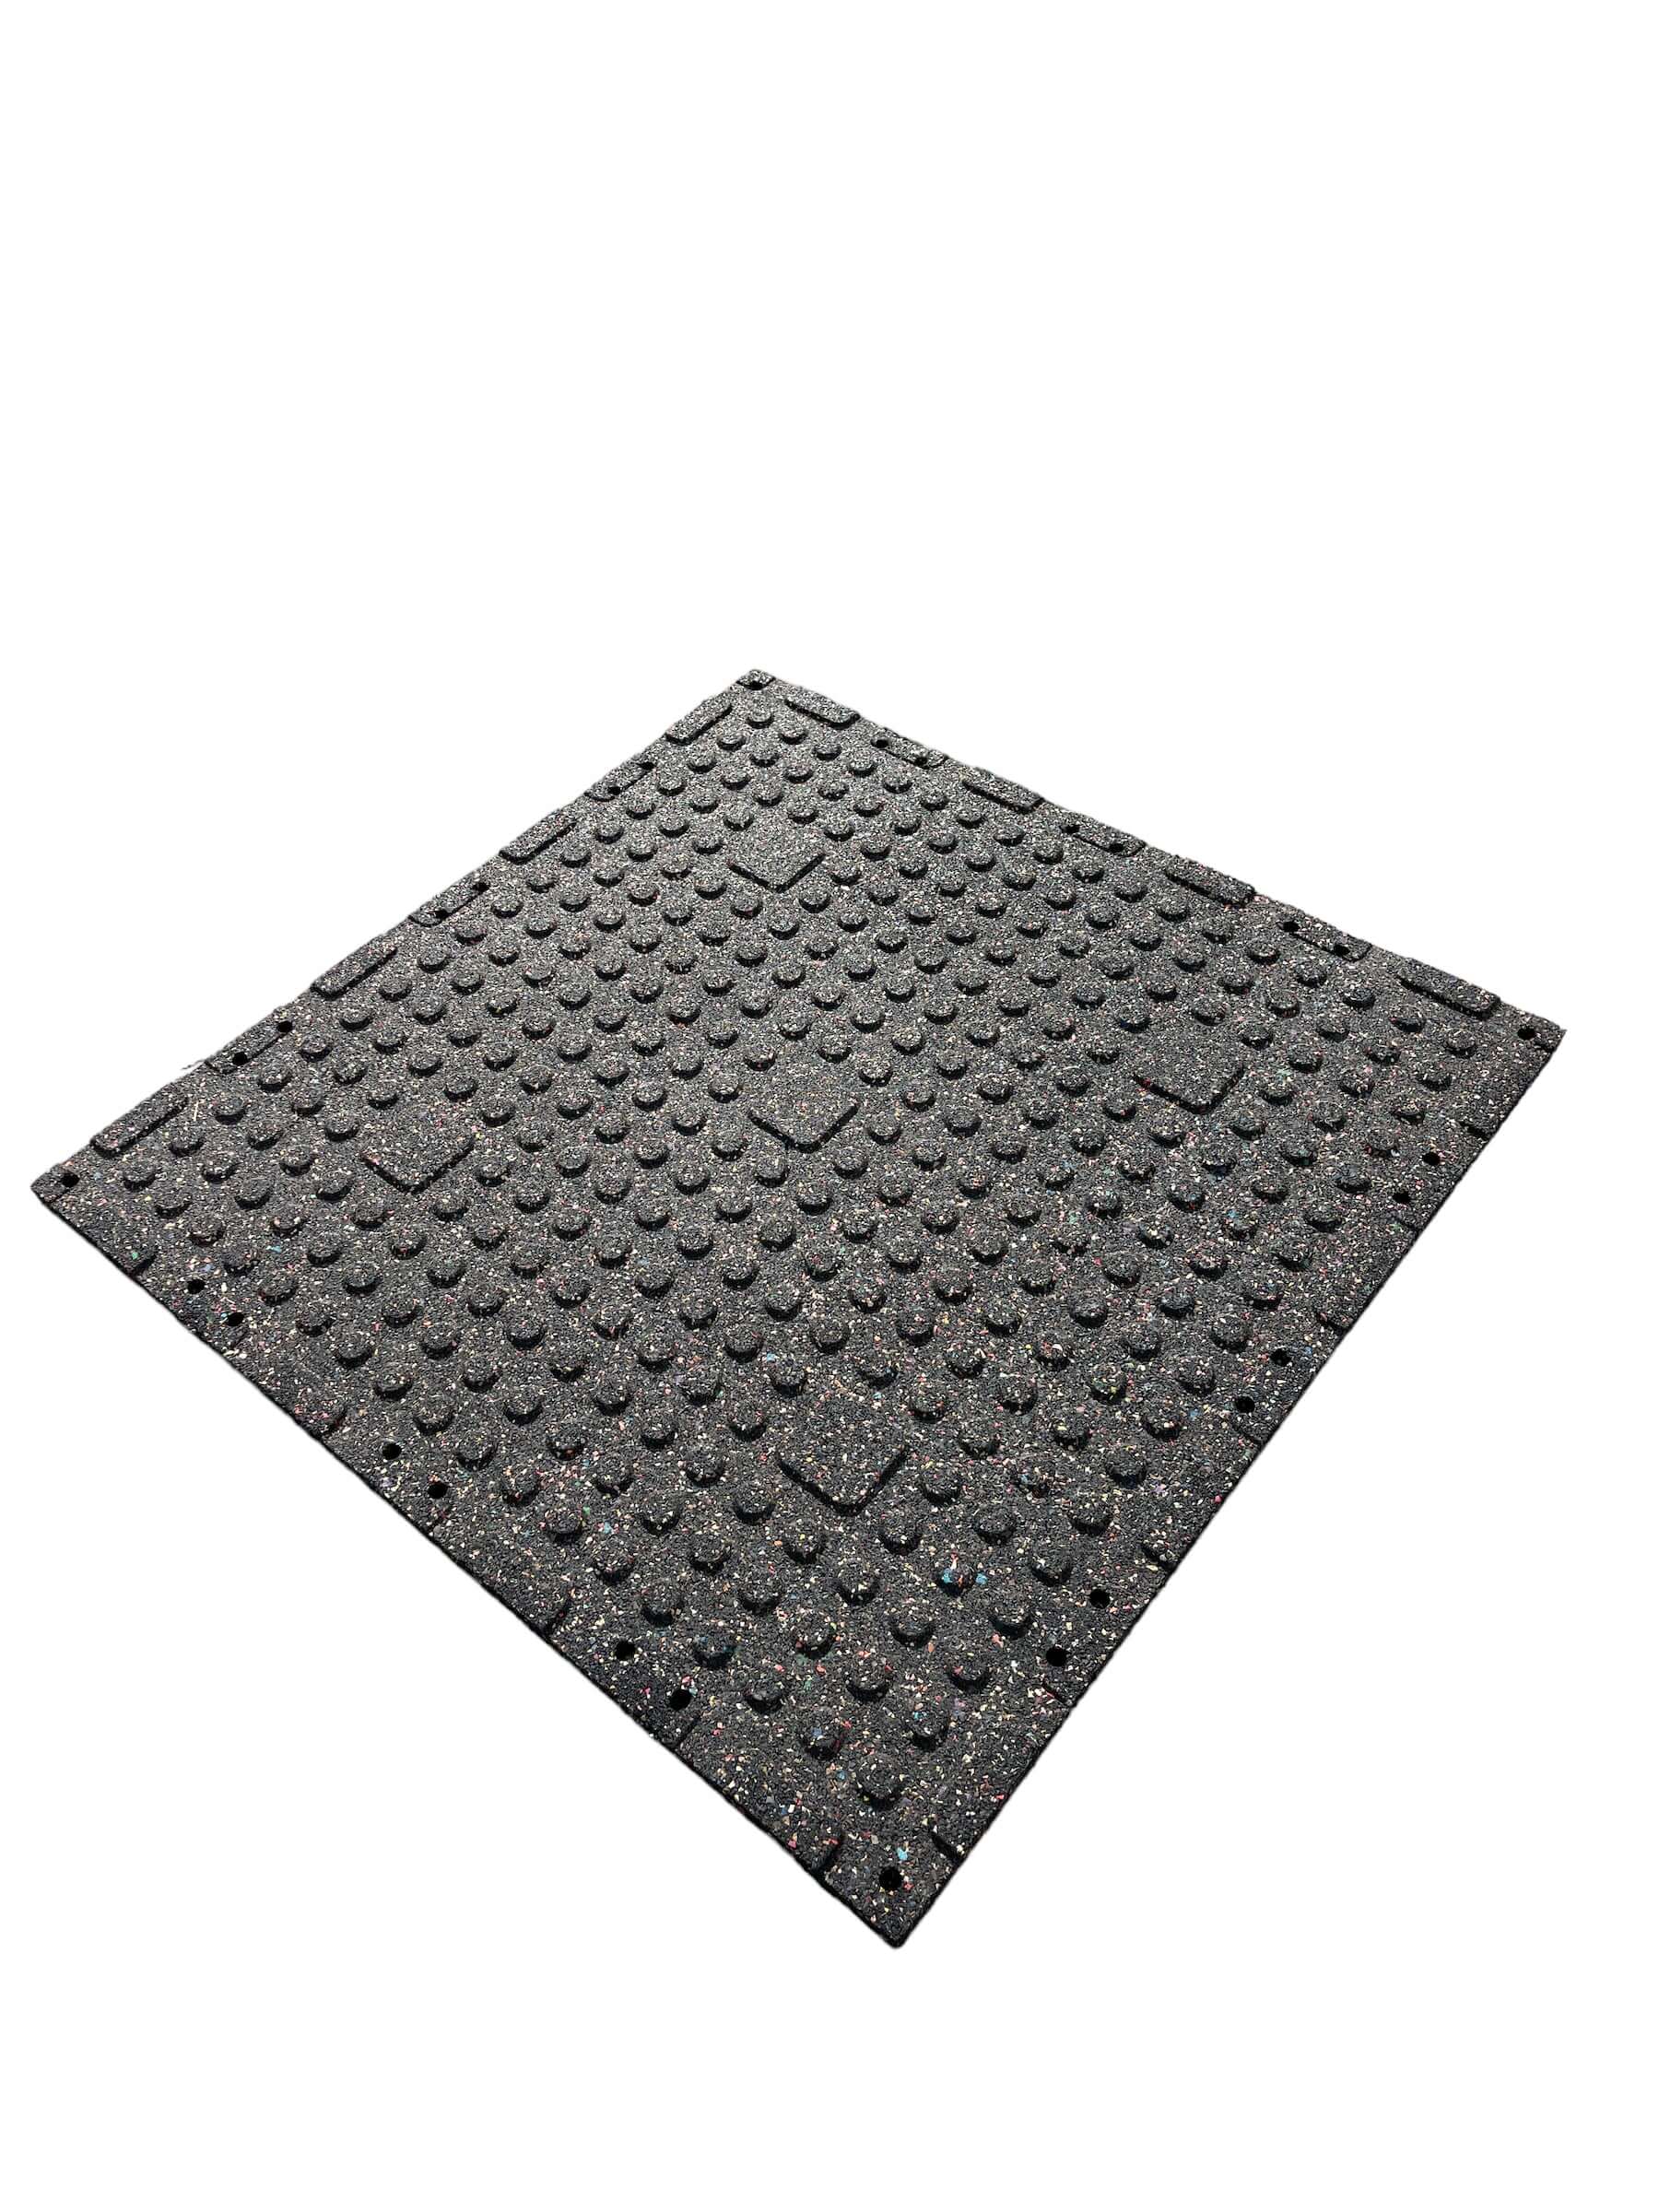 Pack of 18 - 30mm Rubber Gym Flooring Dual Density EPDM Rubber Dense Tile Mat 1m x 1m BLACK | INSOURCE